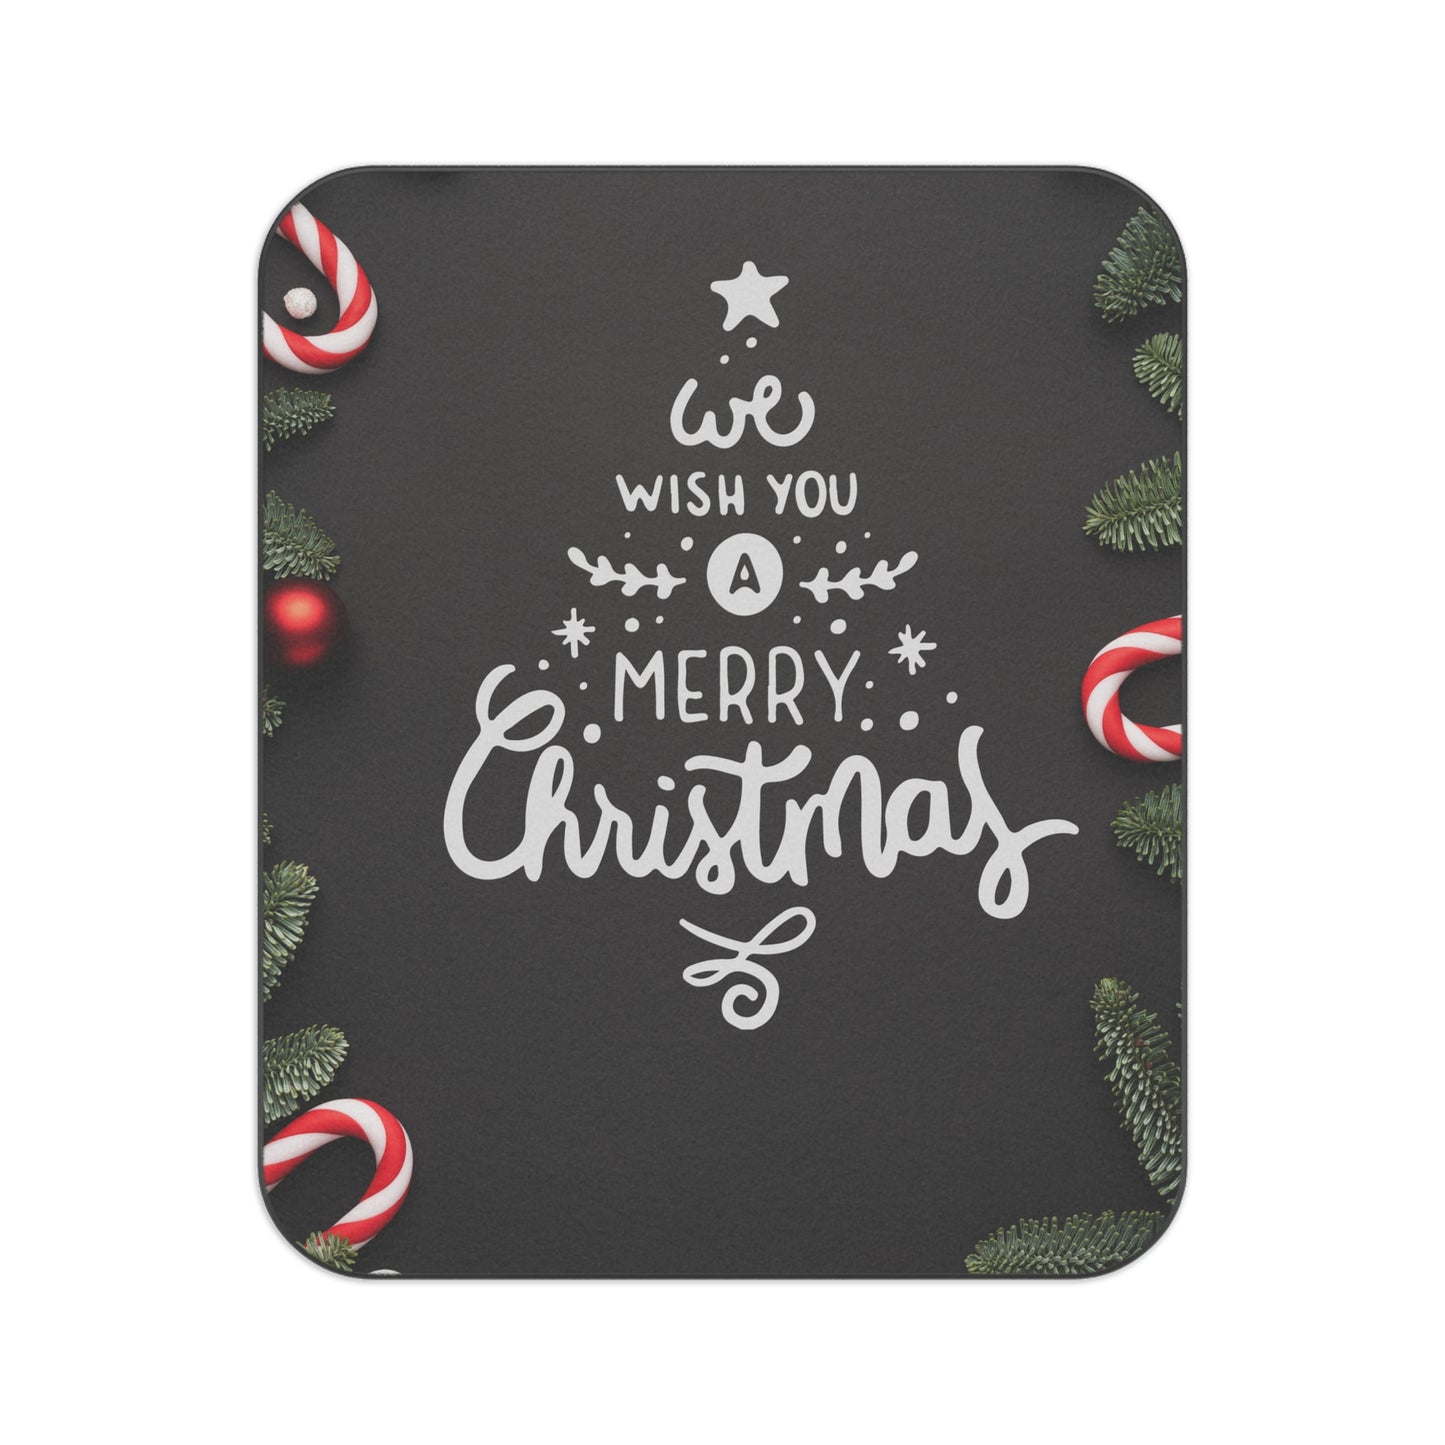 We Wish You Merry Christmas Printed Picnic Blanket